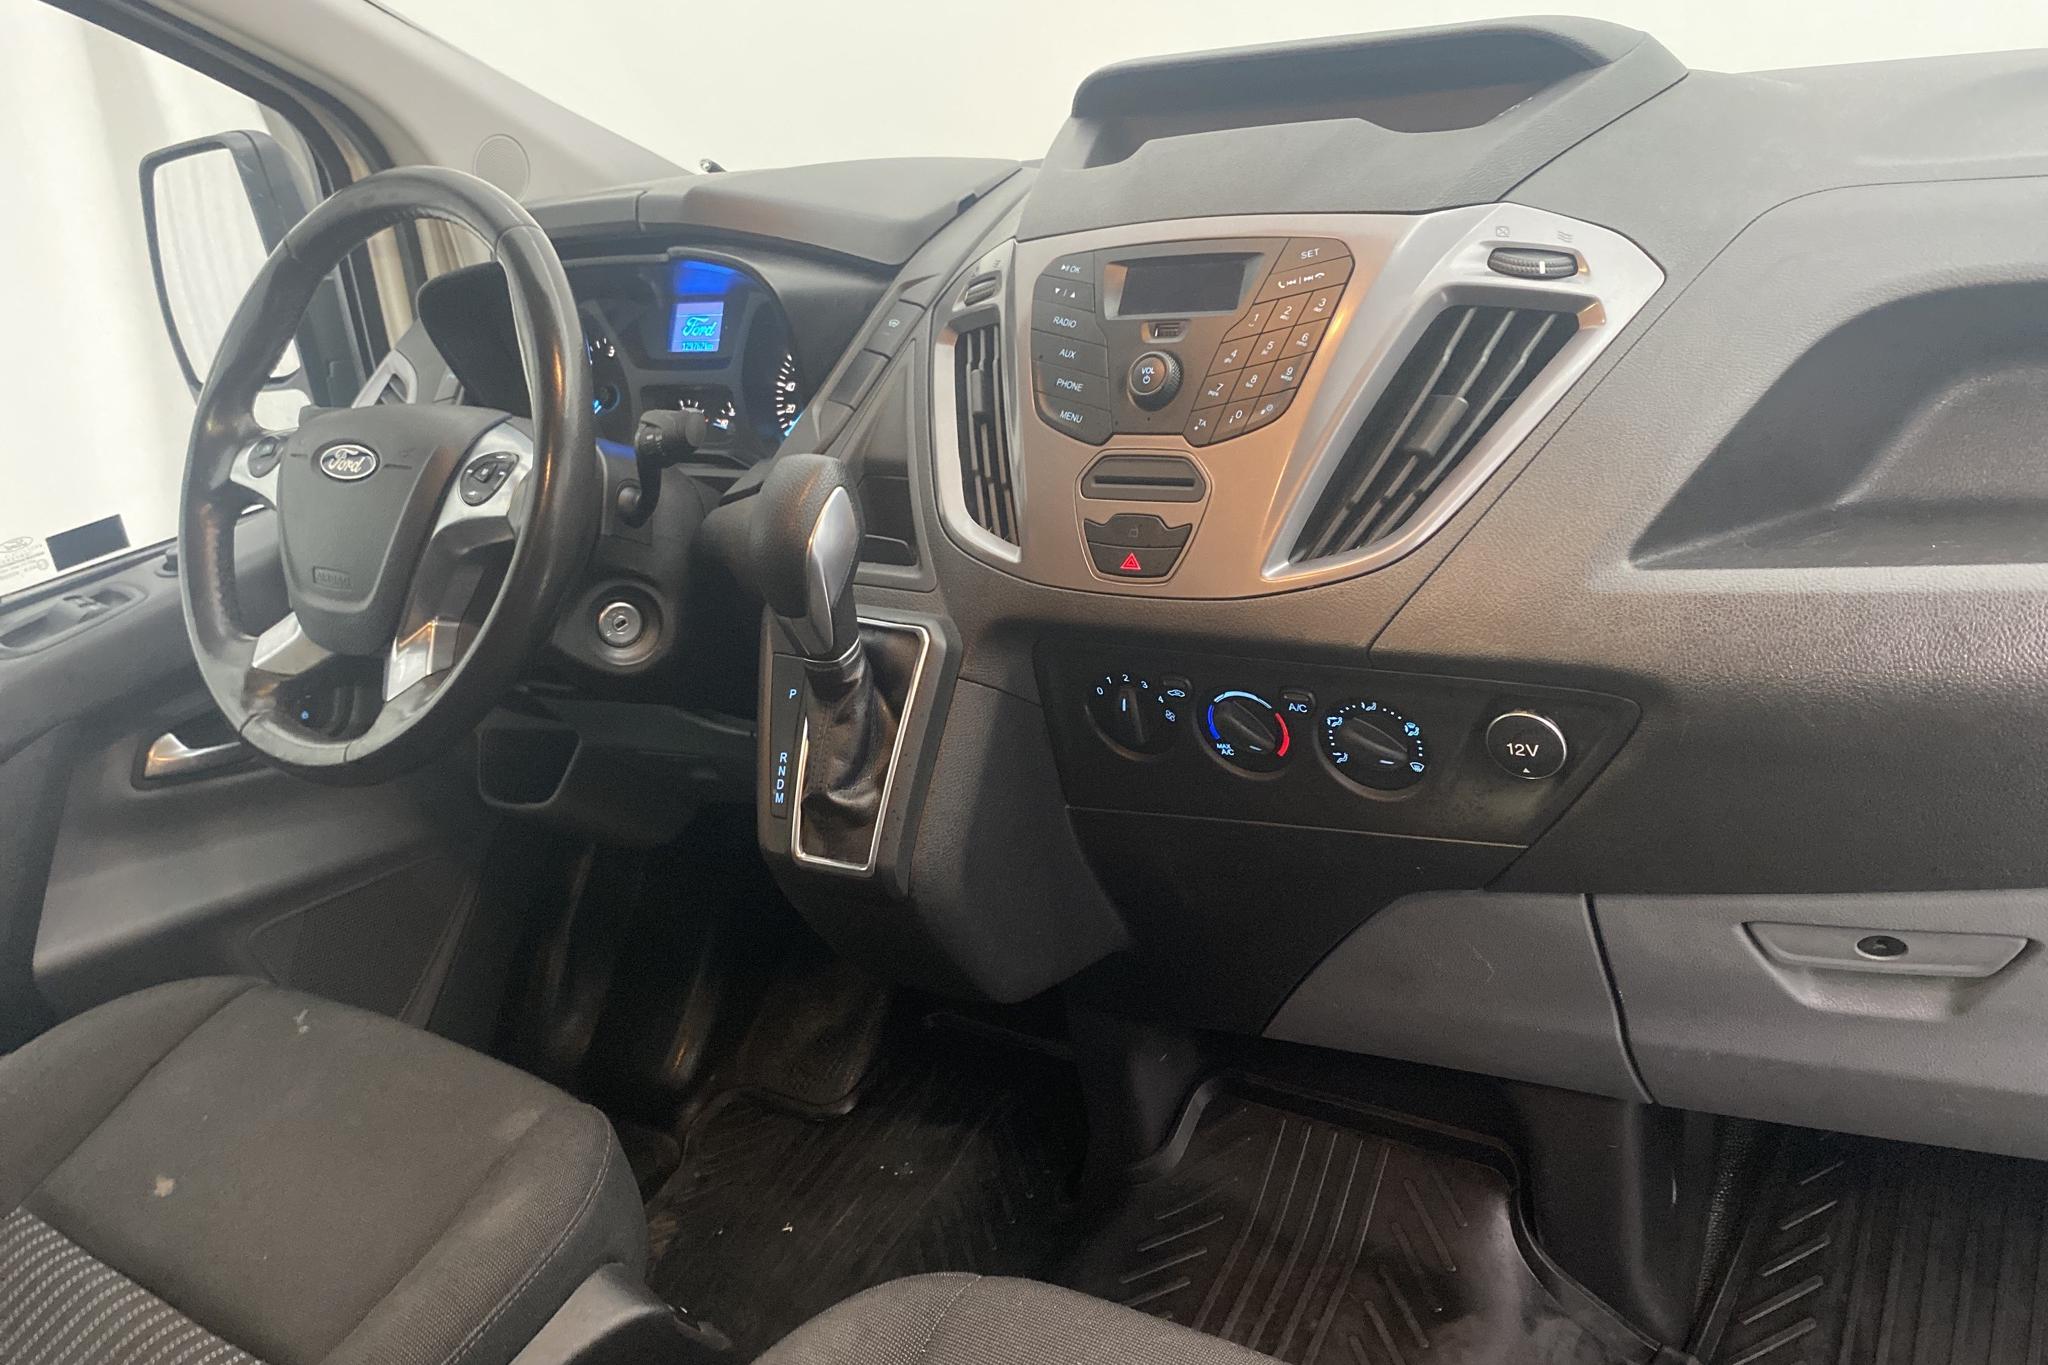 Ford Transit Custom 270 (130hk) - 129 750 km - Automatic - white - 2018